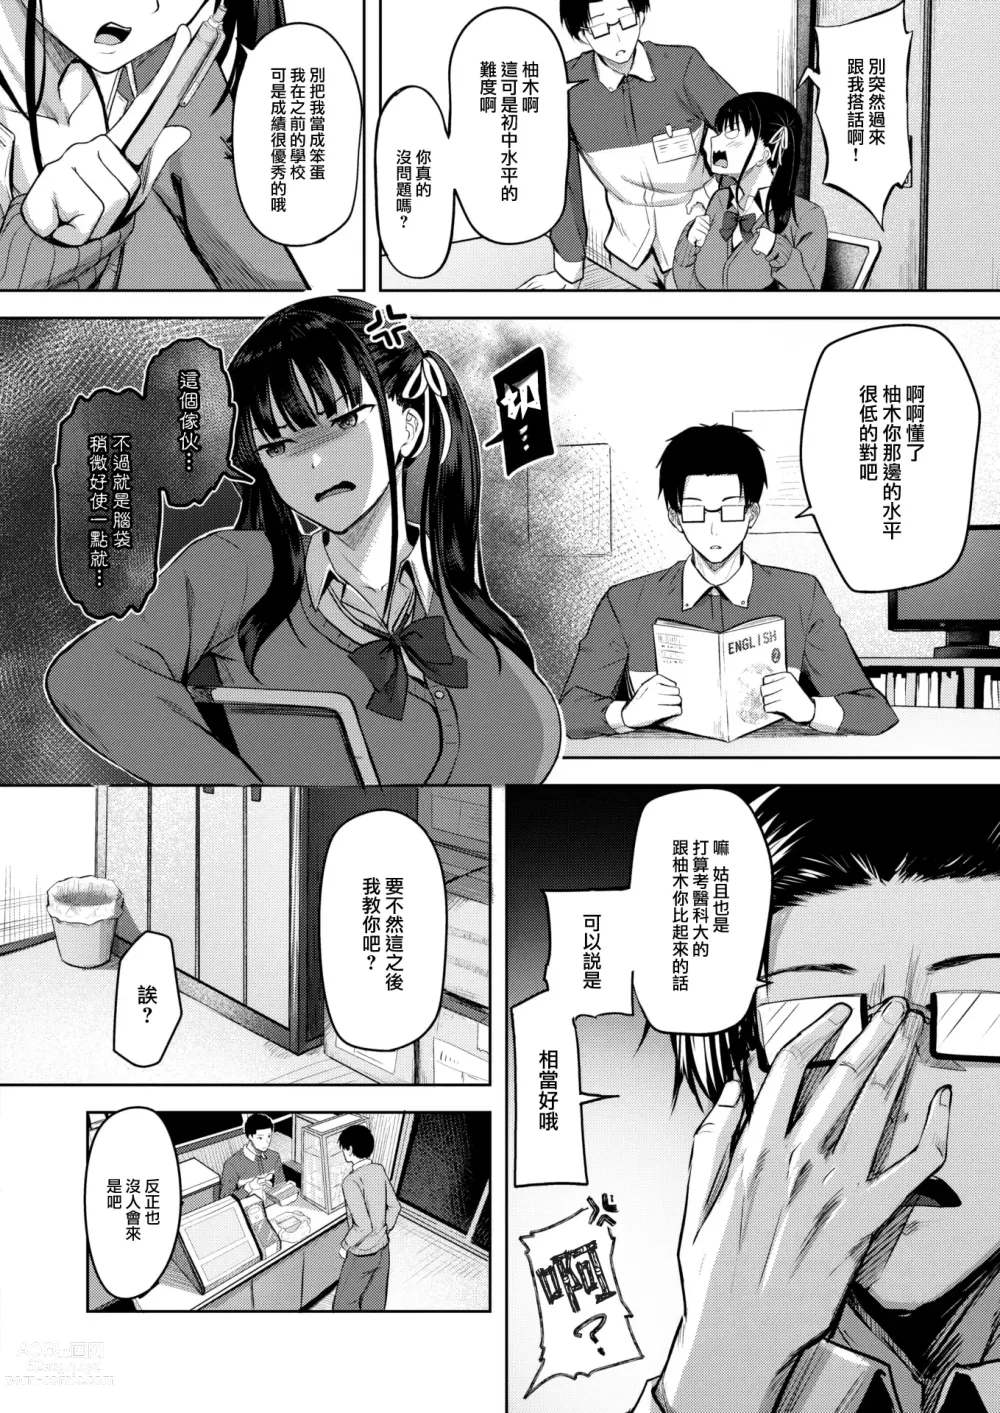 Page 3 of manga Teach me!